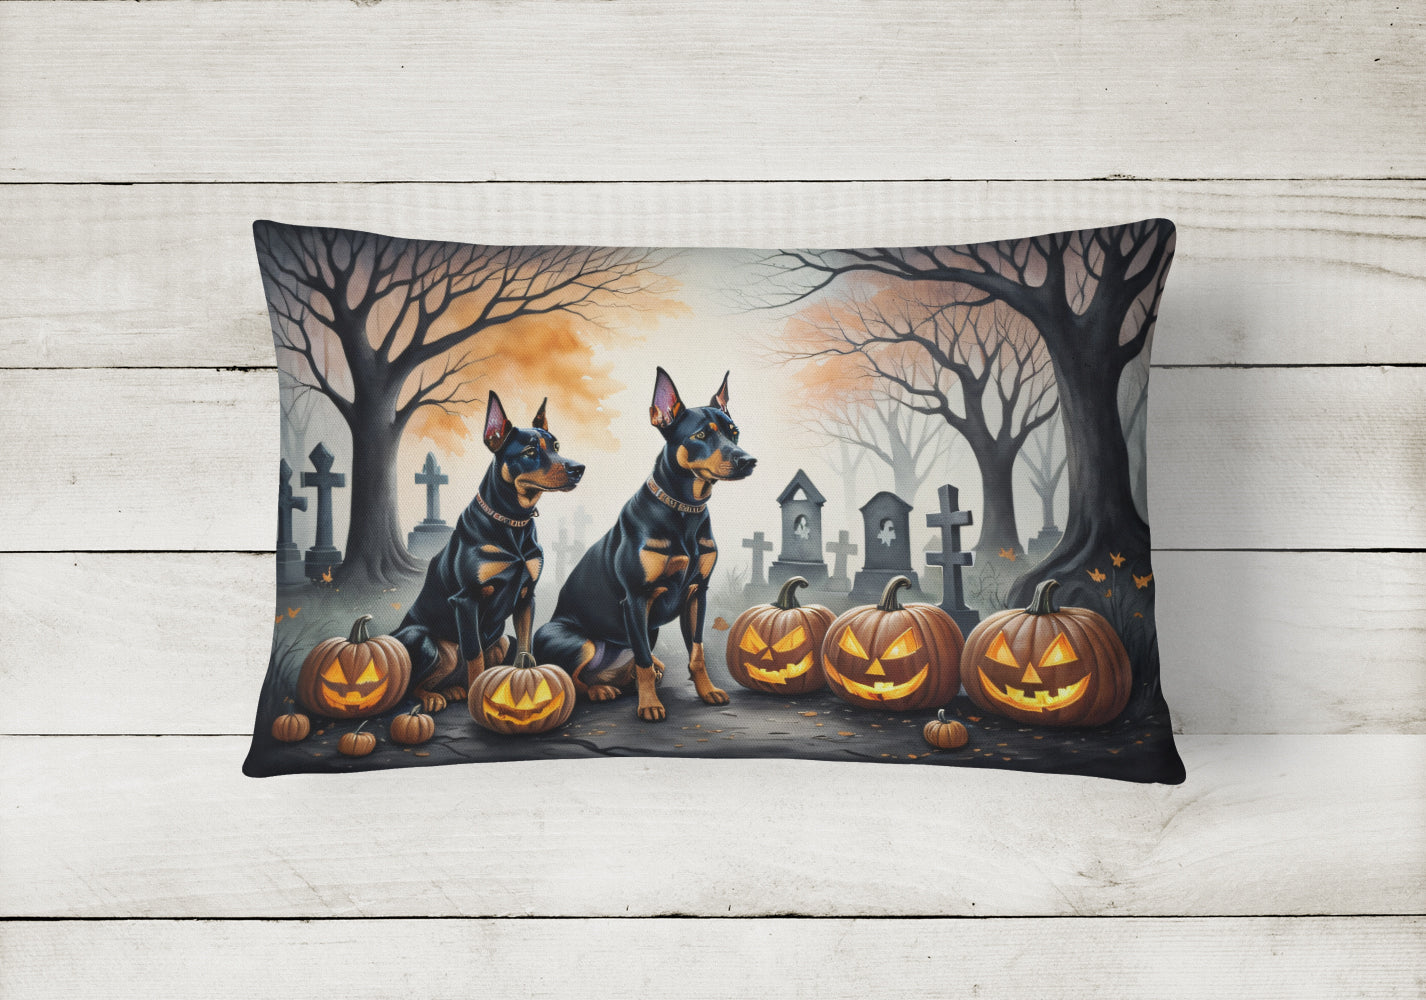 Buy this Doberman Pinscher Spooky Halloween Fabric Decorative Pillow